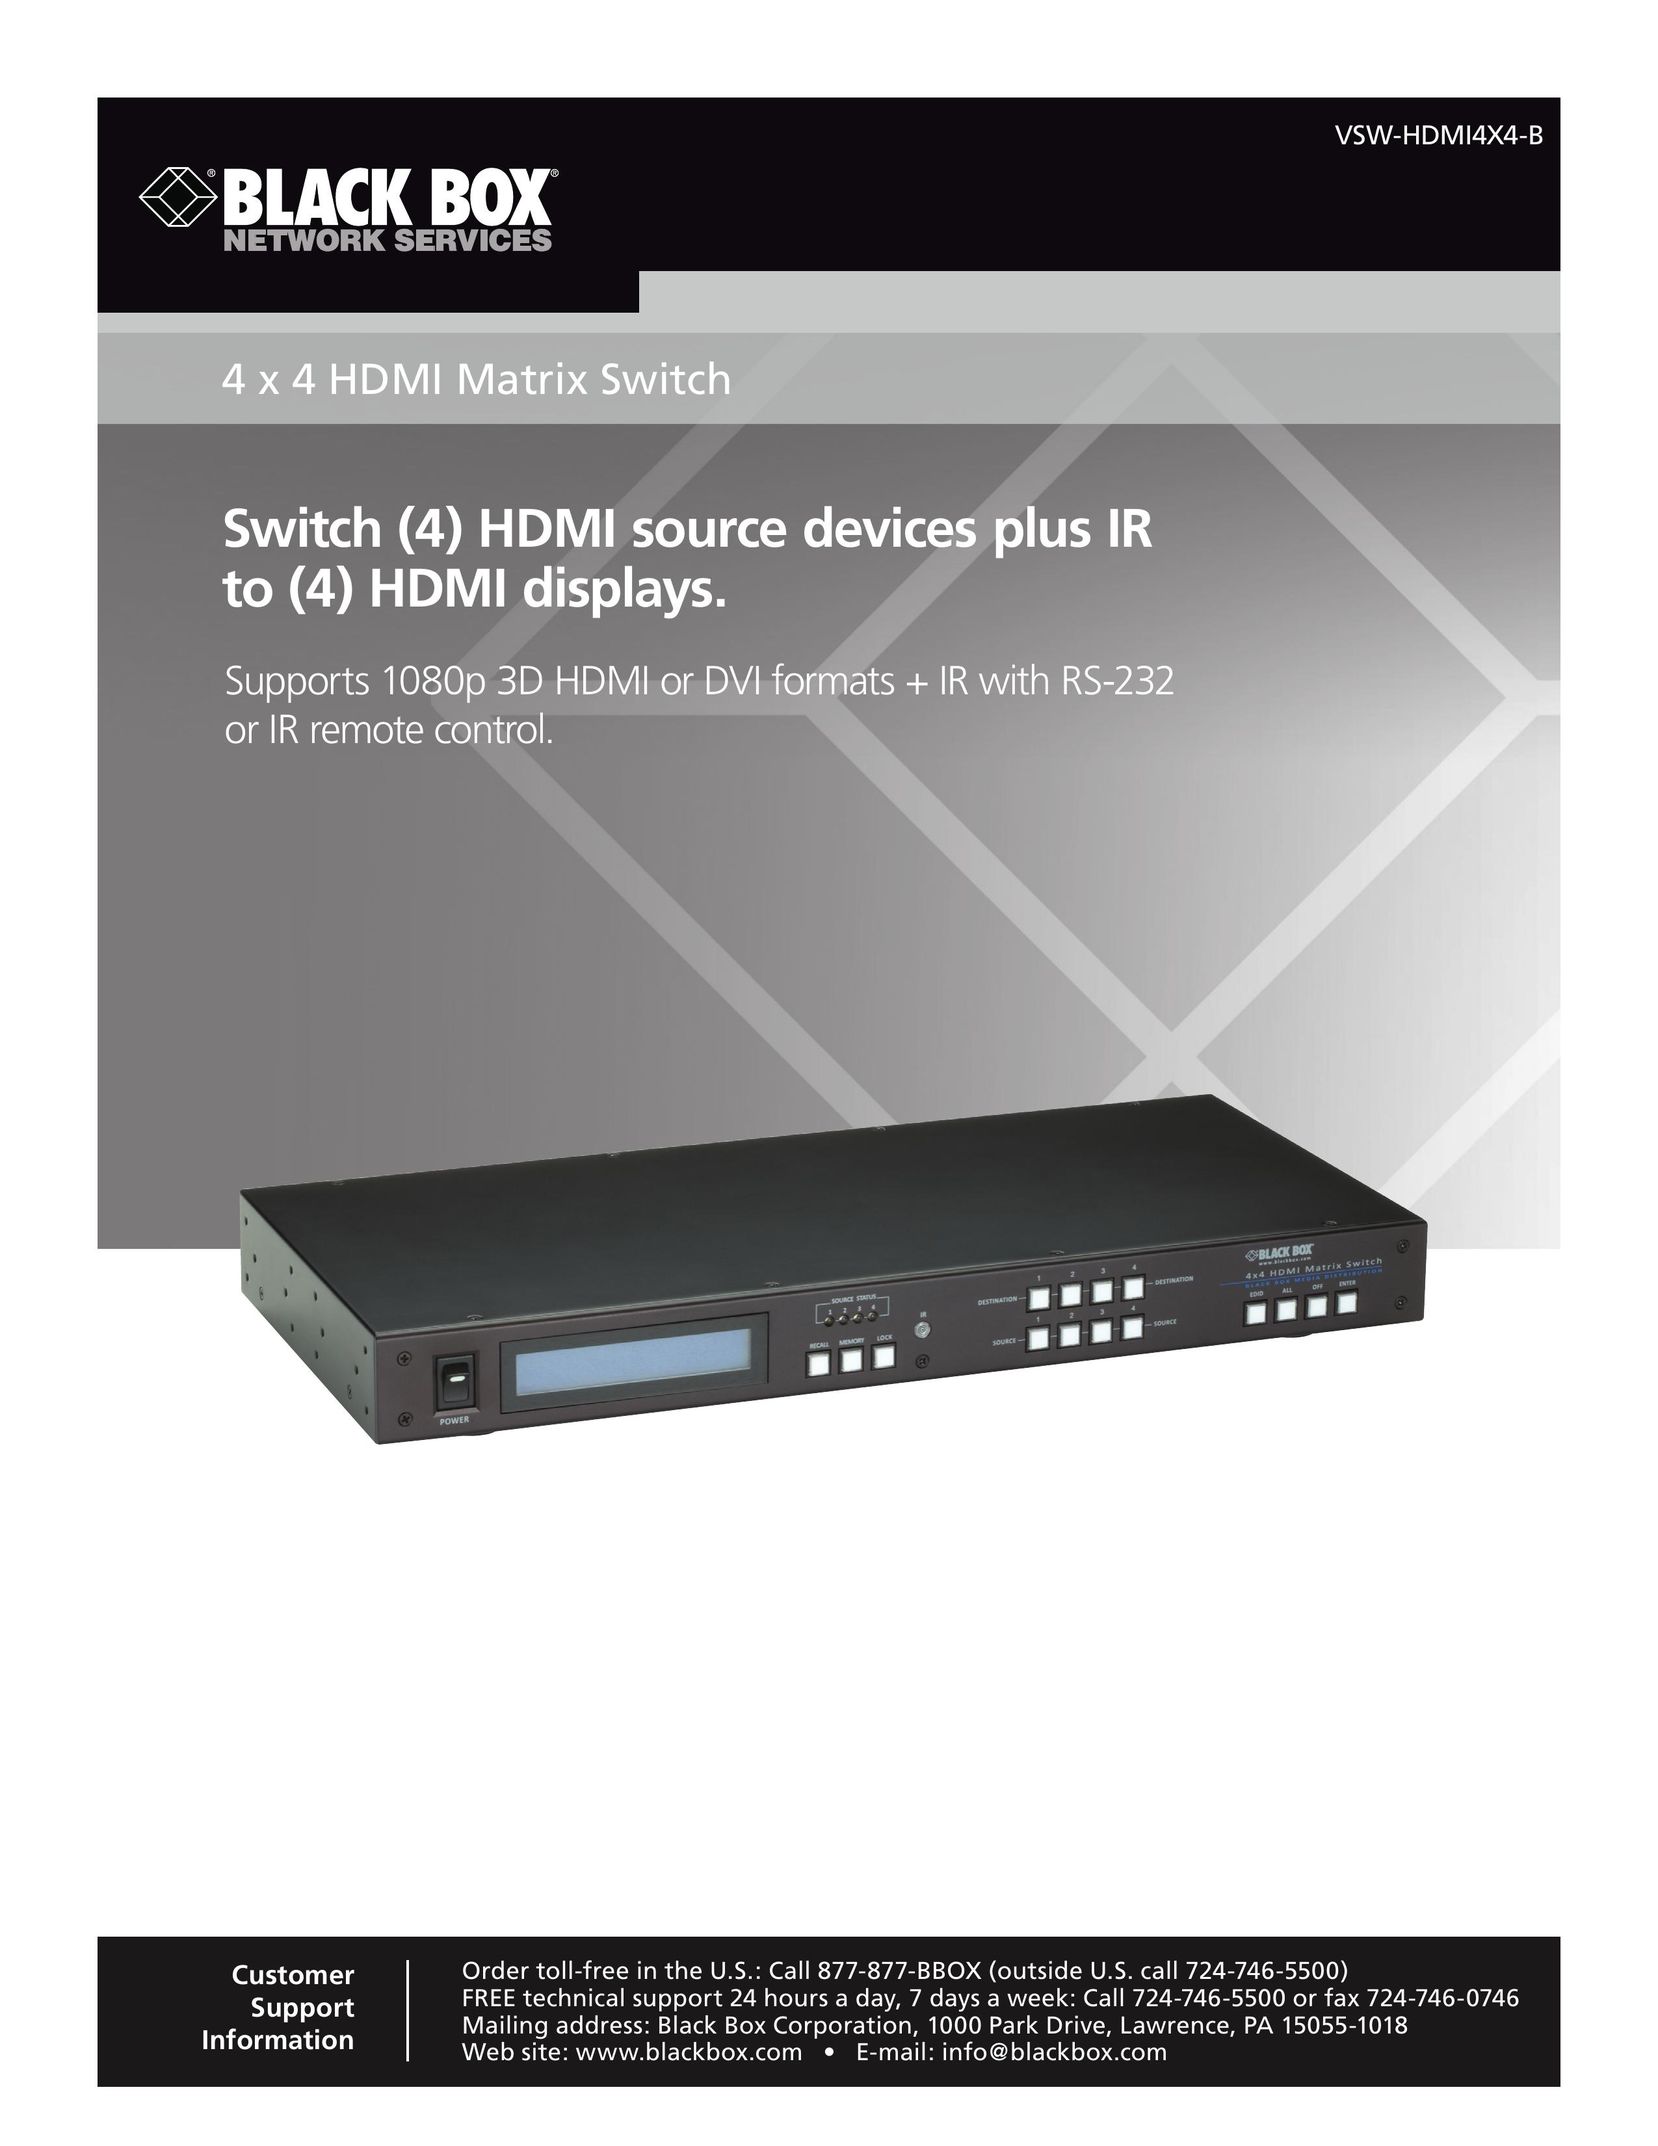 Black Box 4 x 4 HDMI Matrix Switch TV Video Accessories User Manual